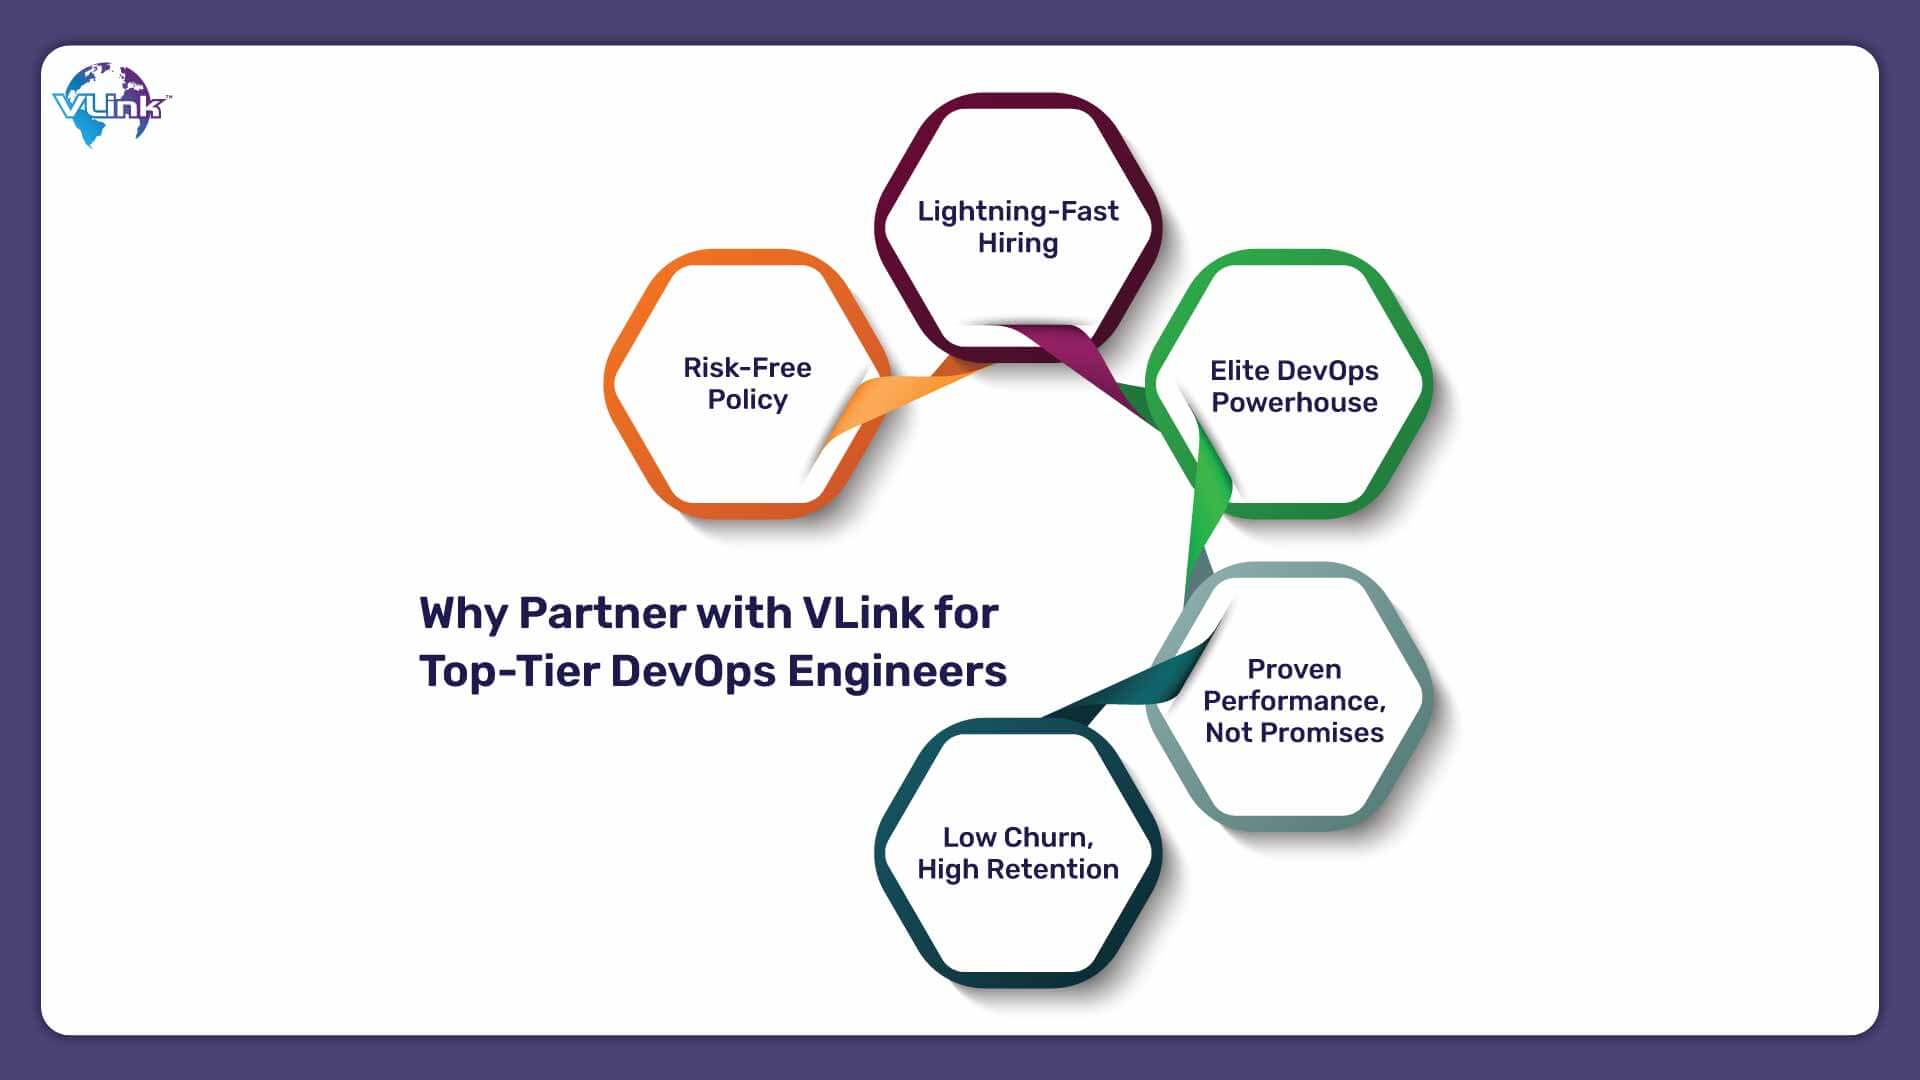 Why Partner with VLink for Top-Tier DevOps Engineers